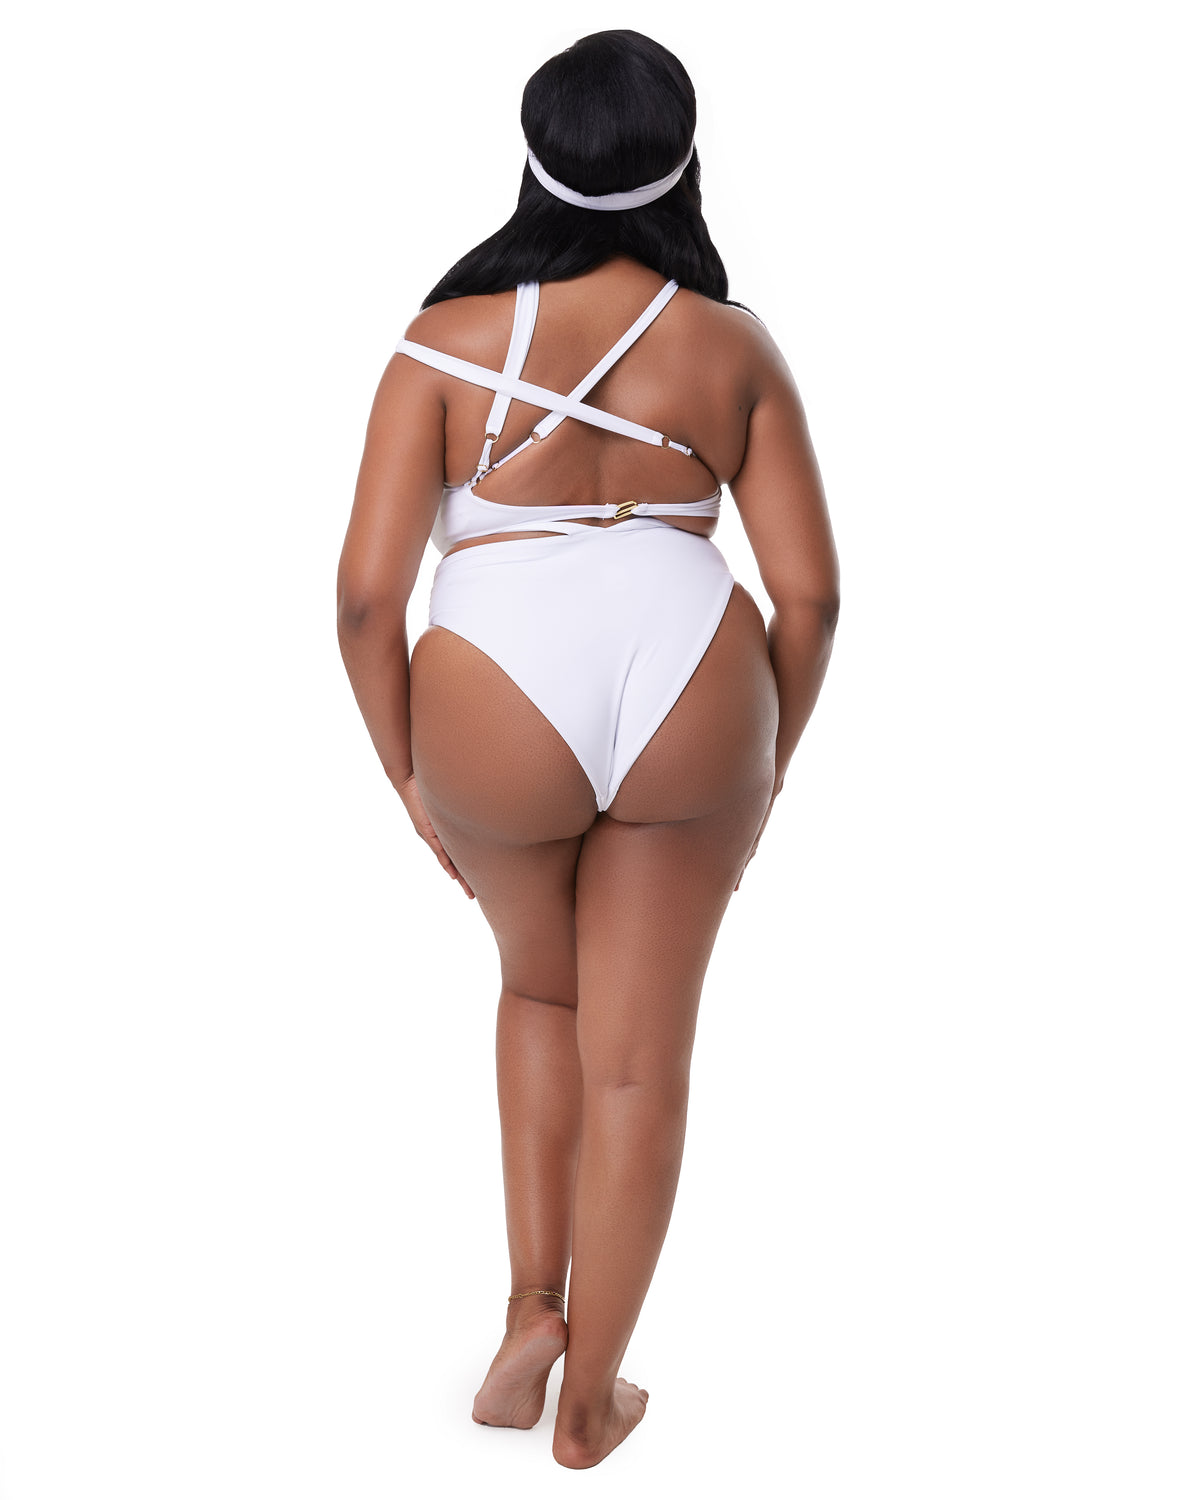 The Gigi Asymmetrical High Waist Bikini